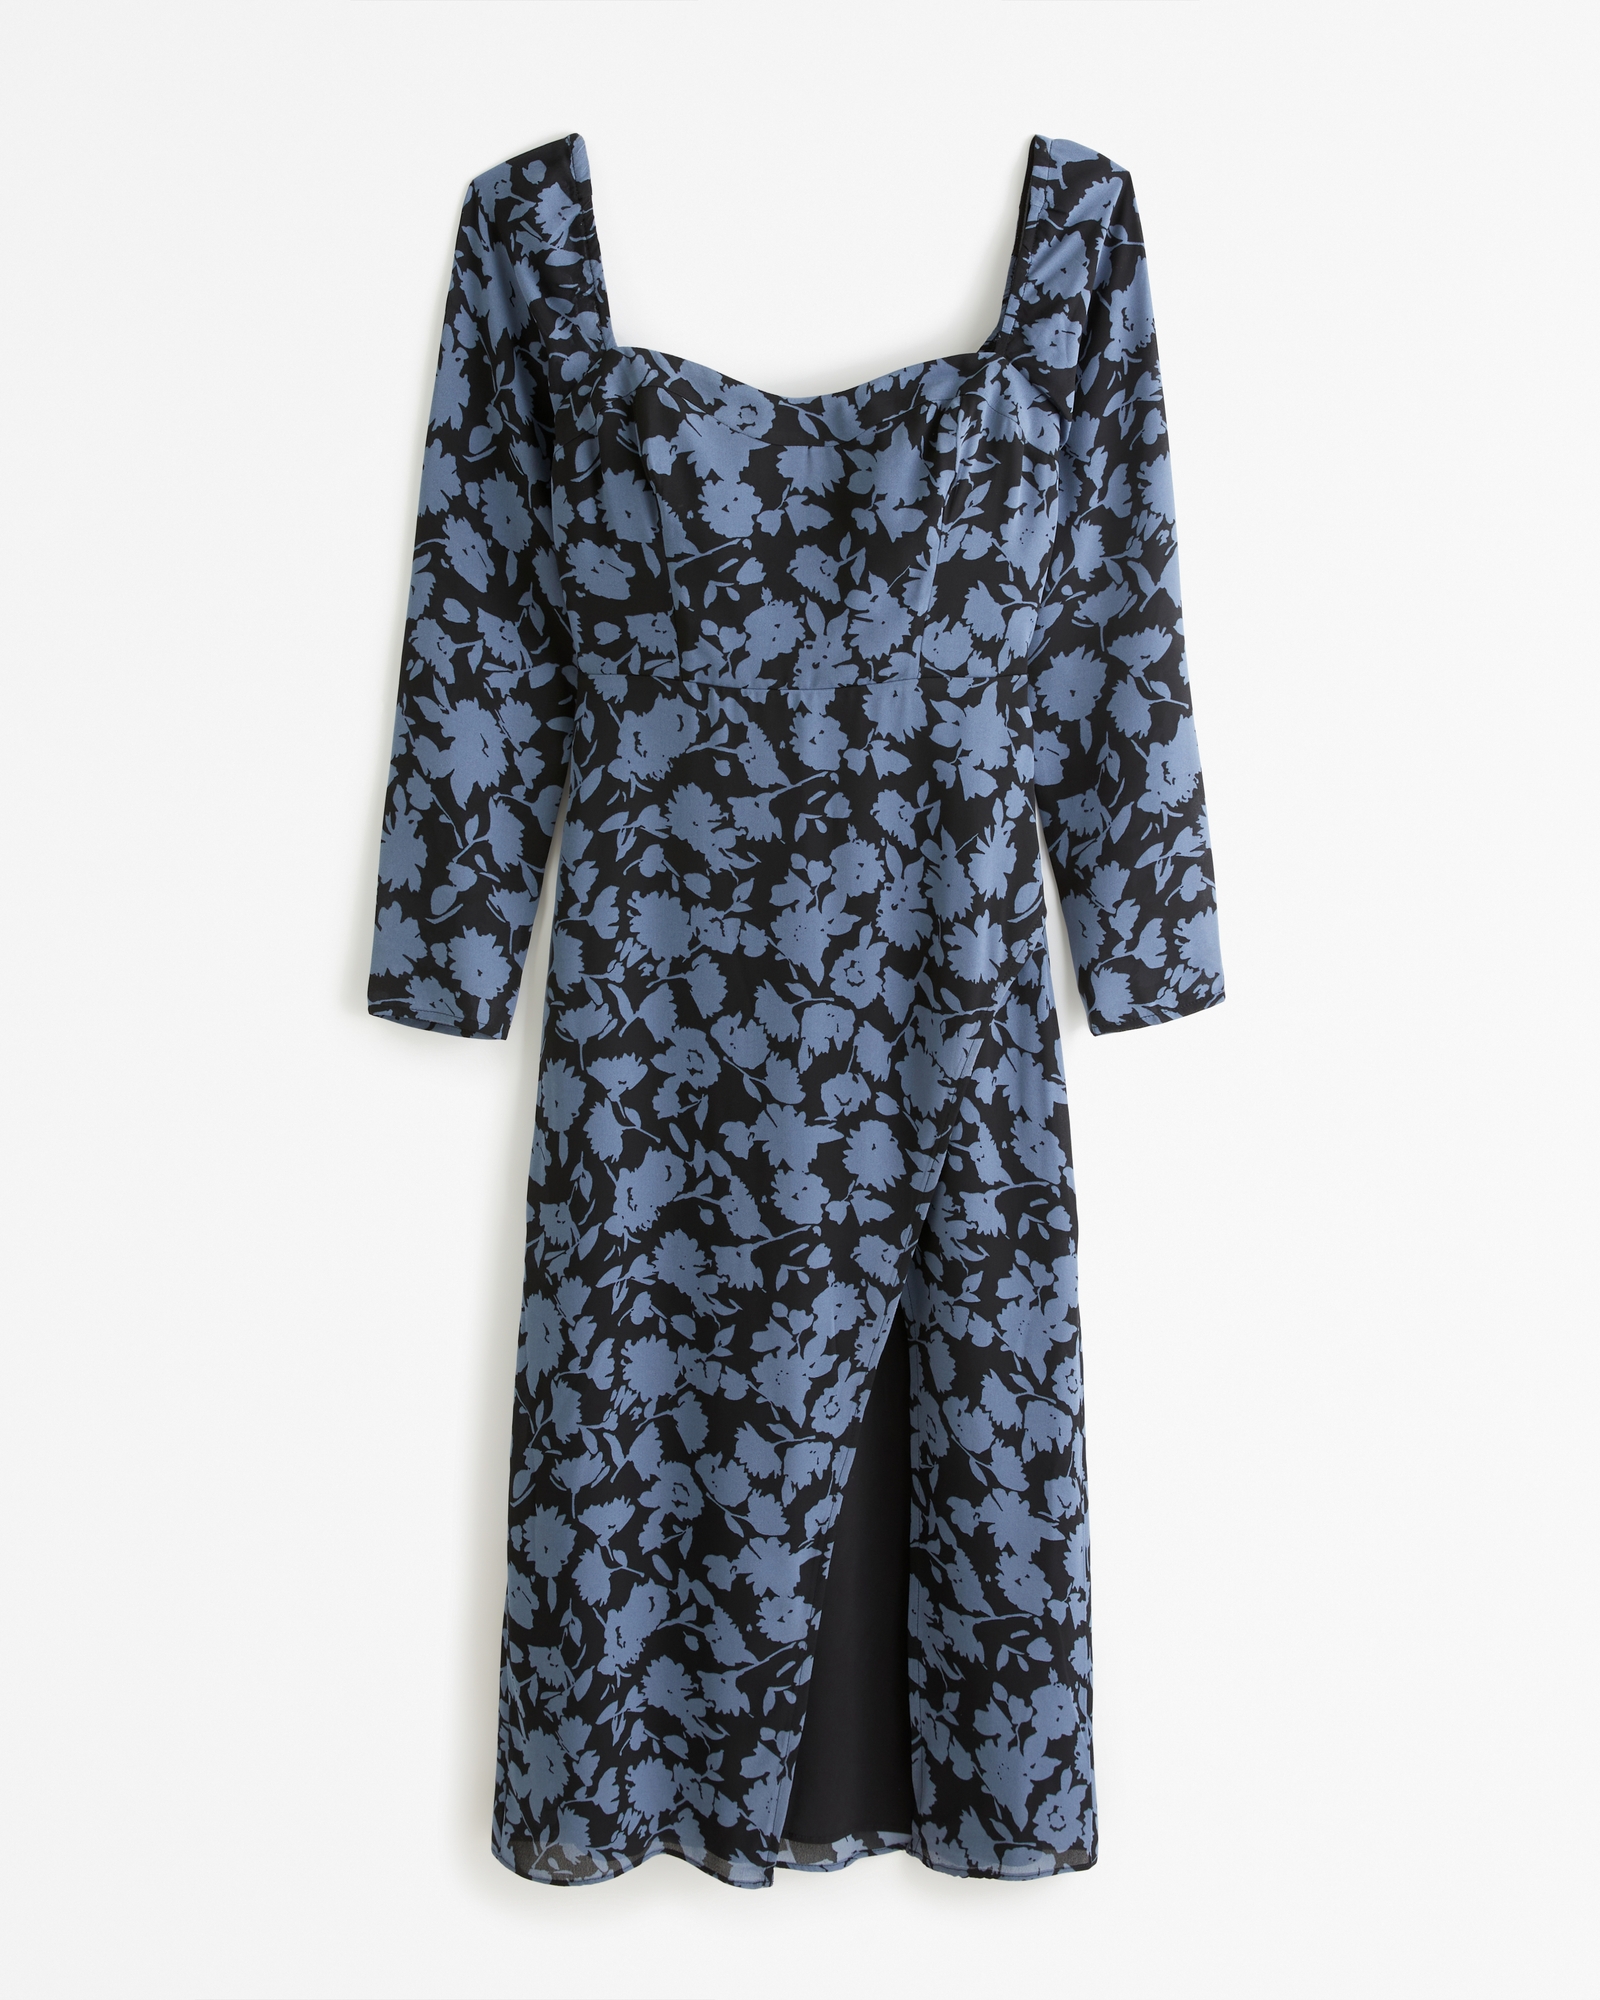 The A&F Camille Long-Sleeve Midi Dress